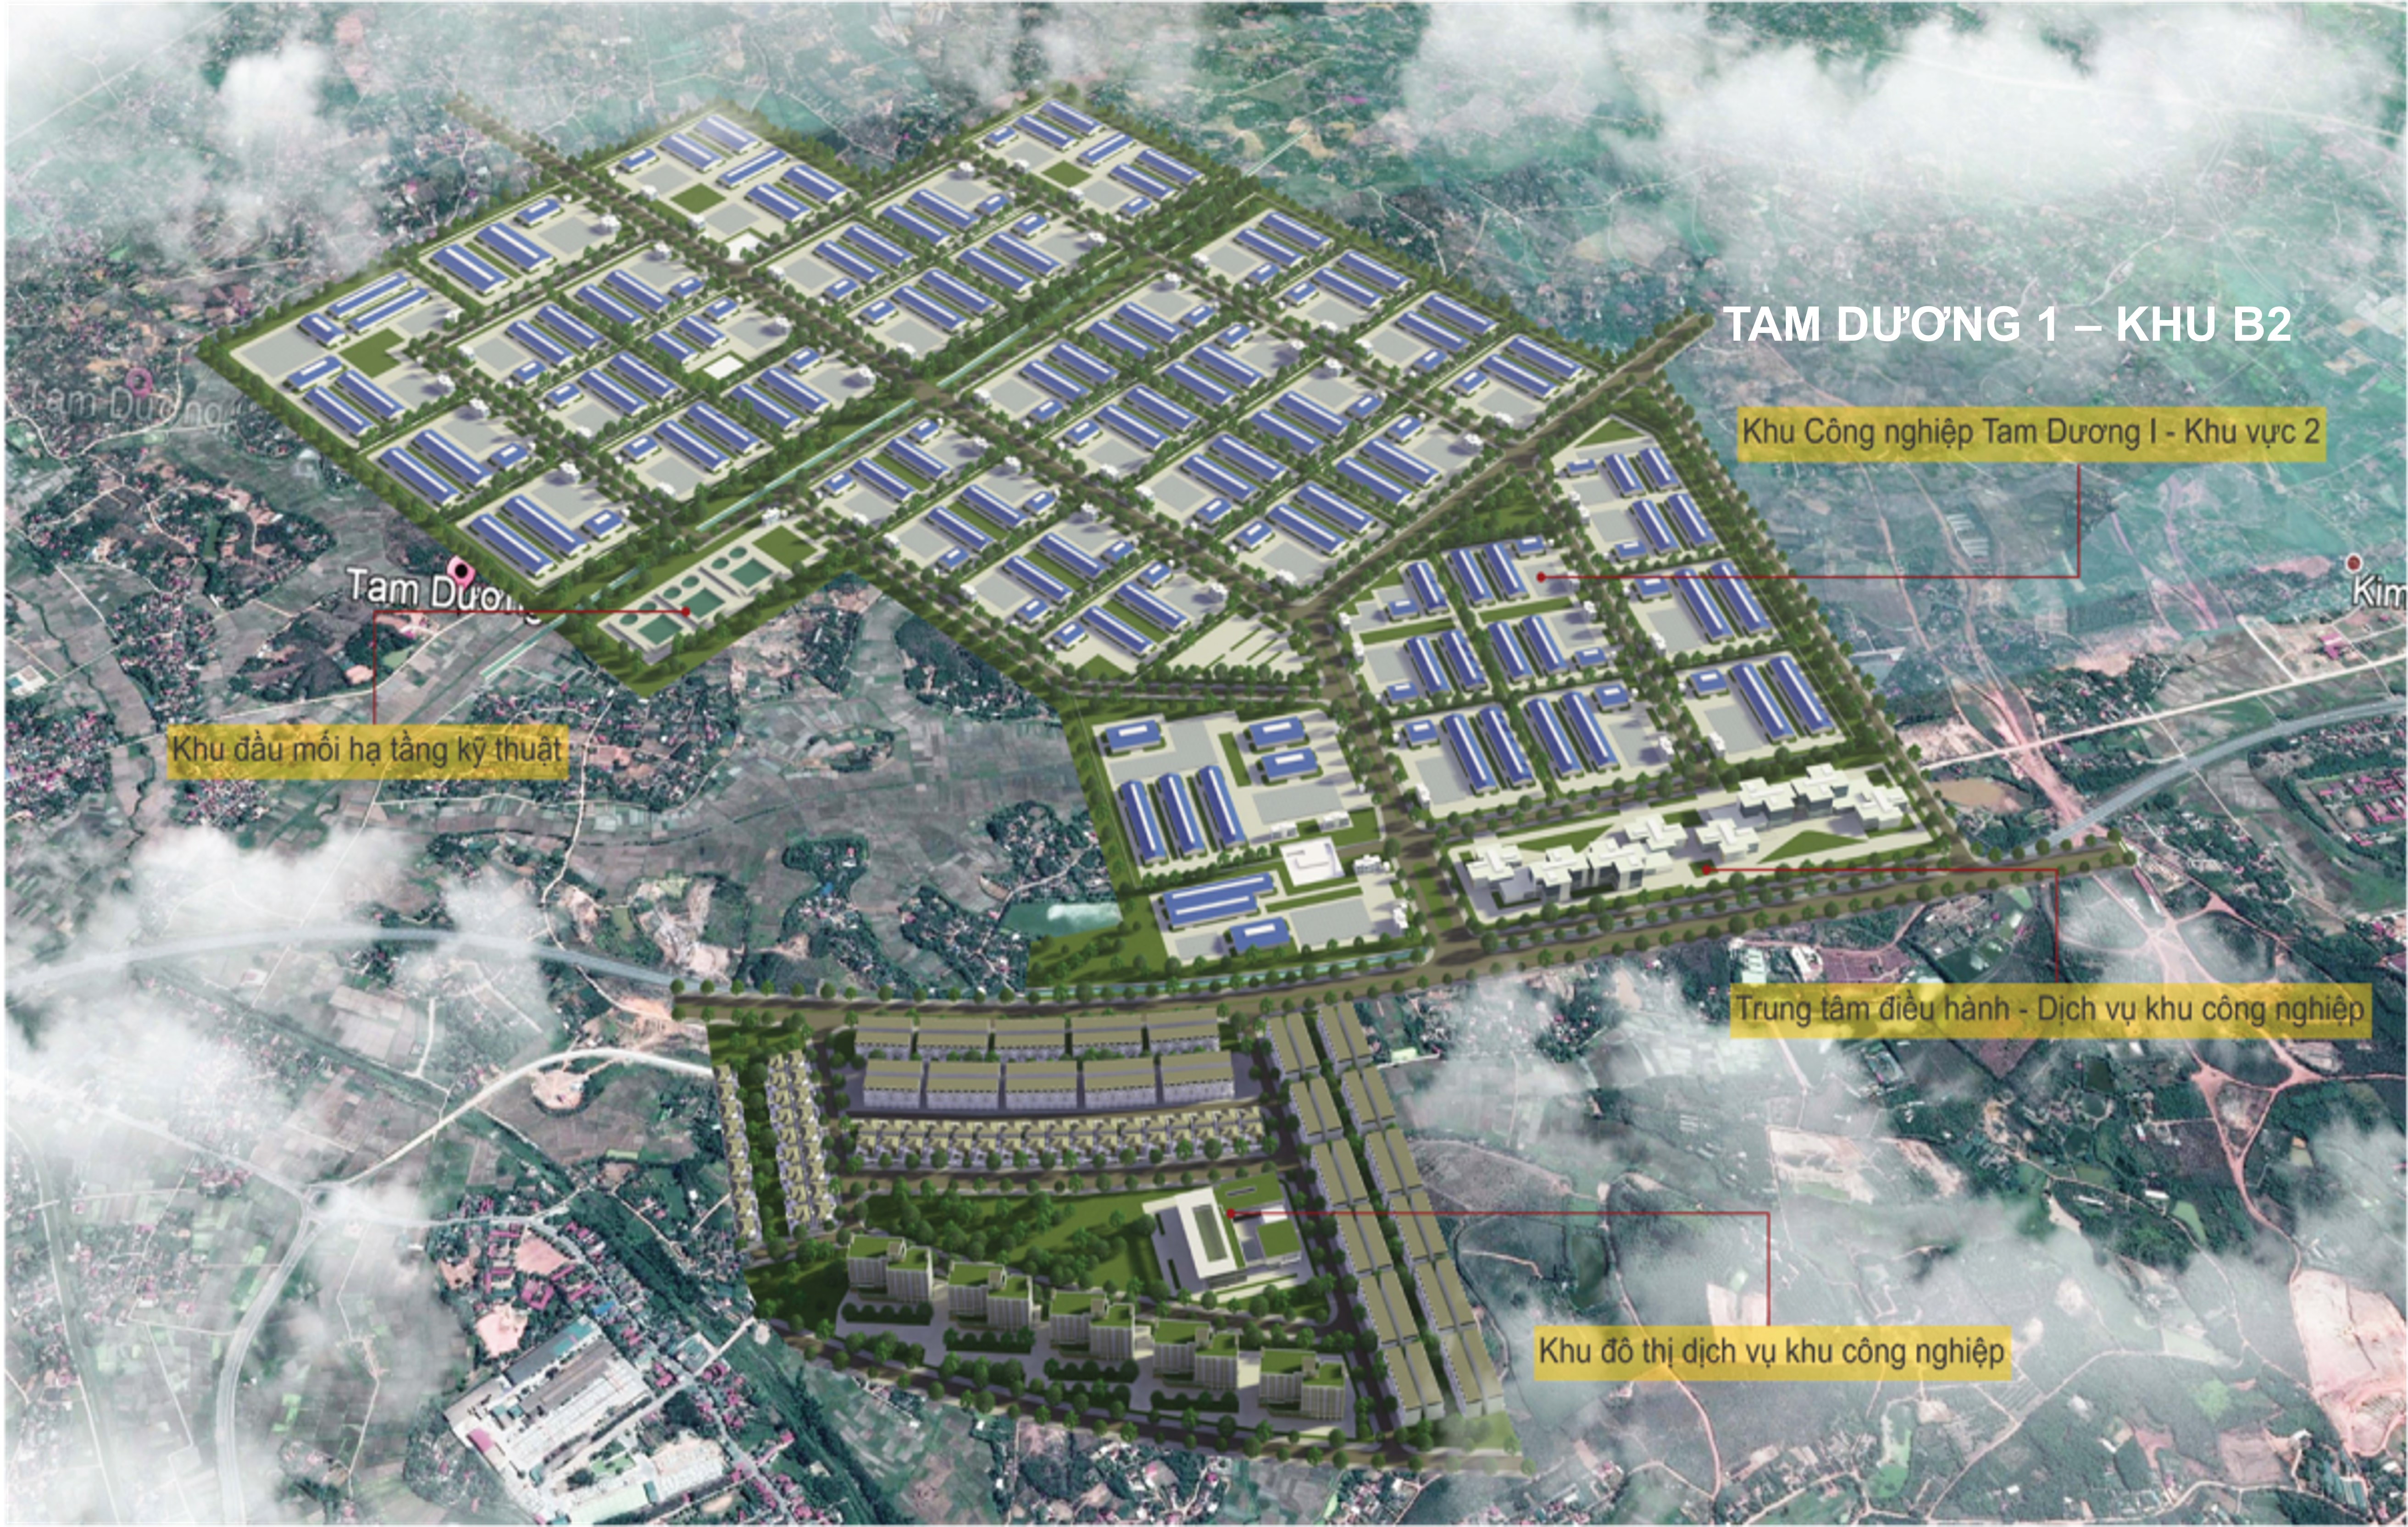 Tam Duong 1 Industrial Park